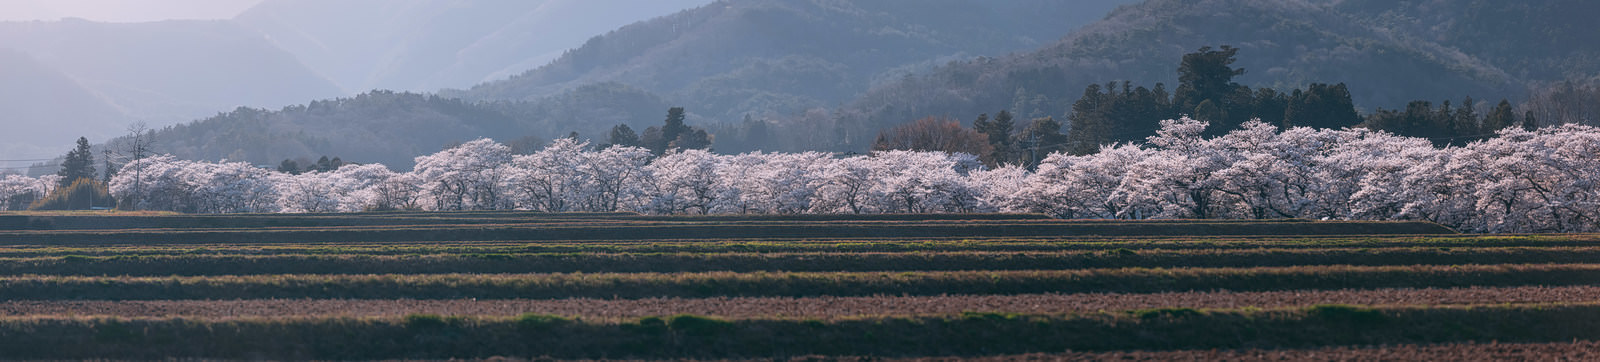 「3kmに渡る長大な笹原川の千本桜 | フリー素材のぱくたそ」の写真